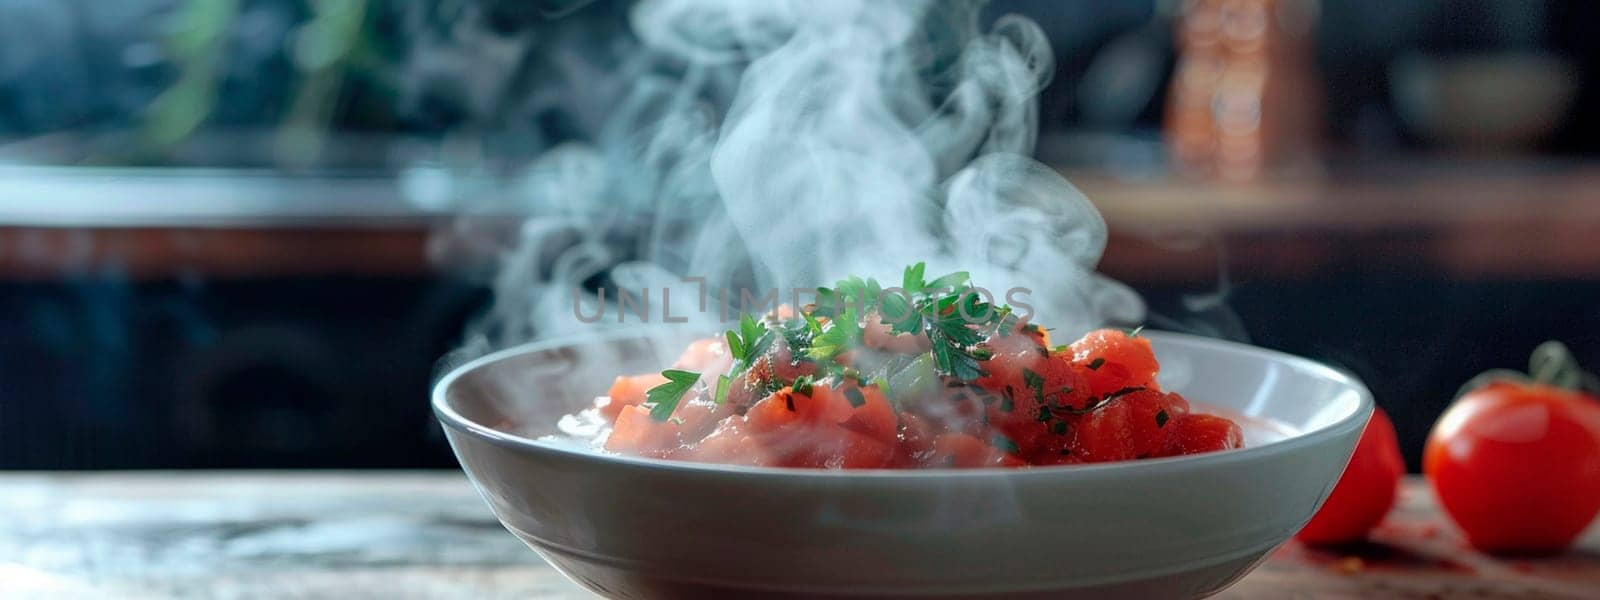 hot borscht in a plate. Selective focus. by yanadjana